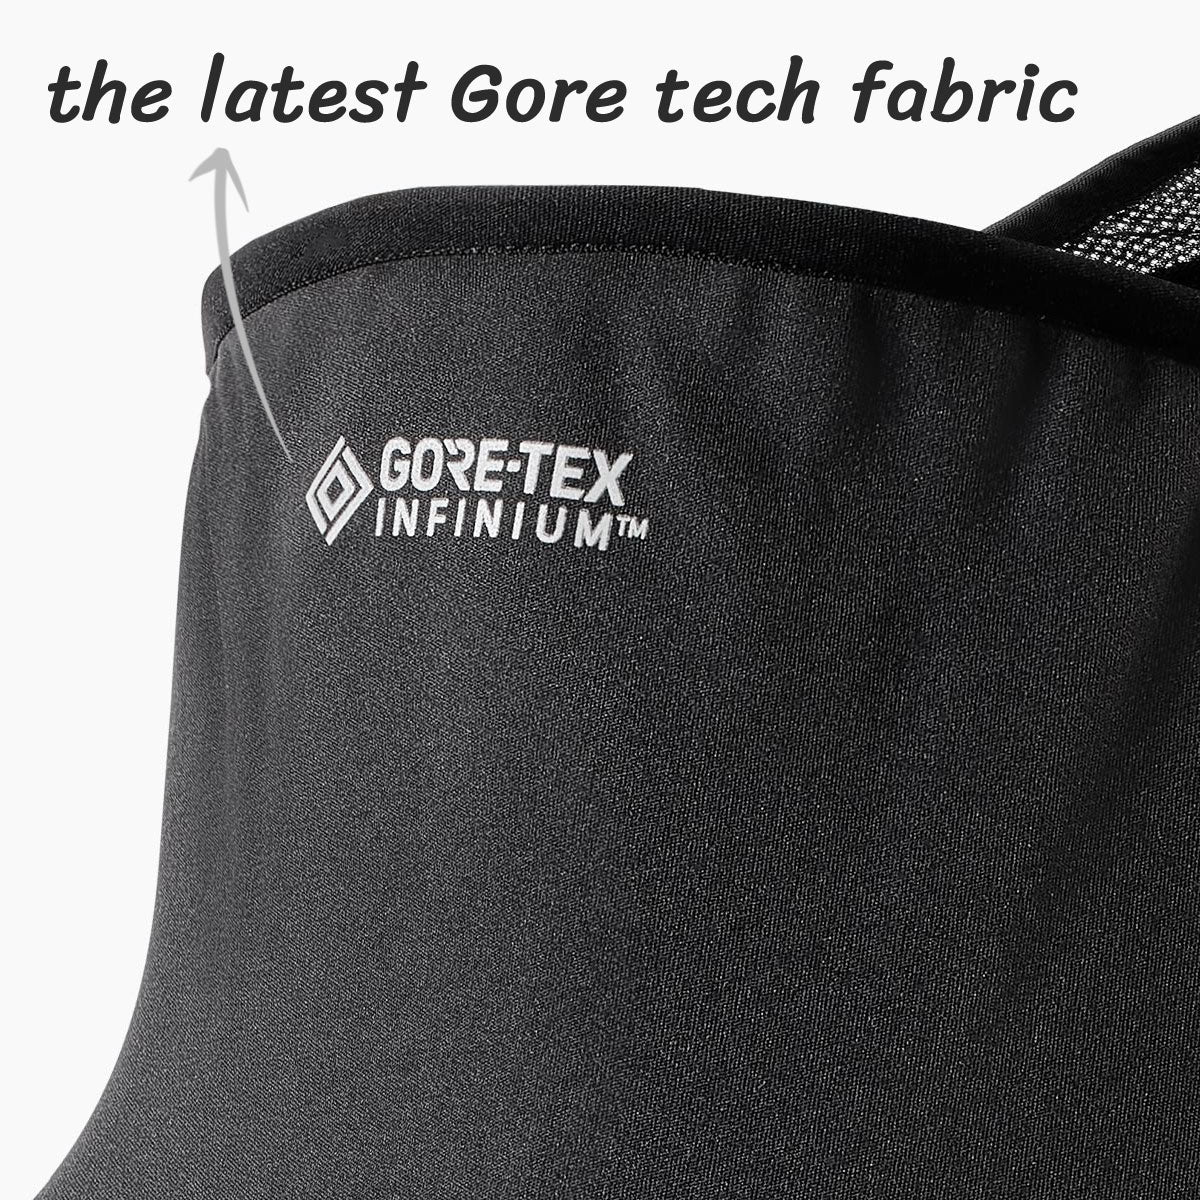 Rev It! Karma 2 Gore-Tex Infinium wind collar: Upgrade on a bestselling neck warmer to make it even better - GTX Infinium